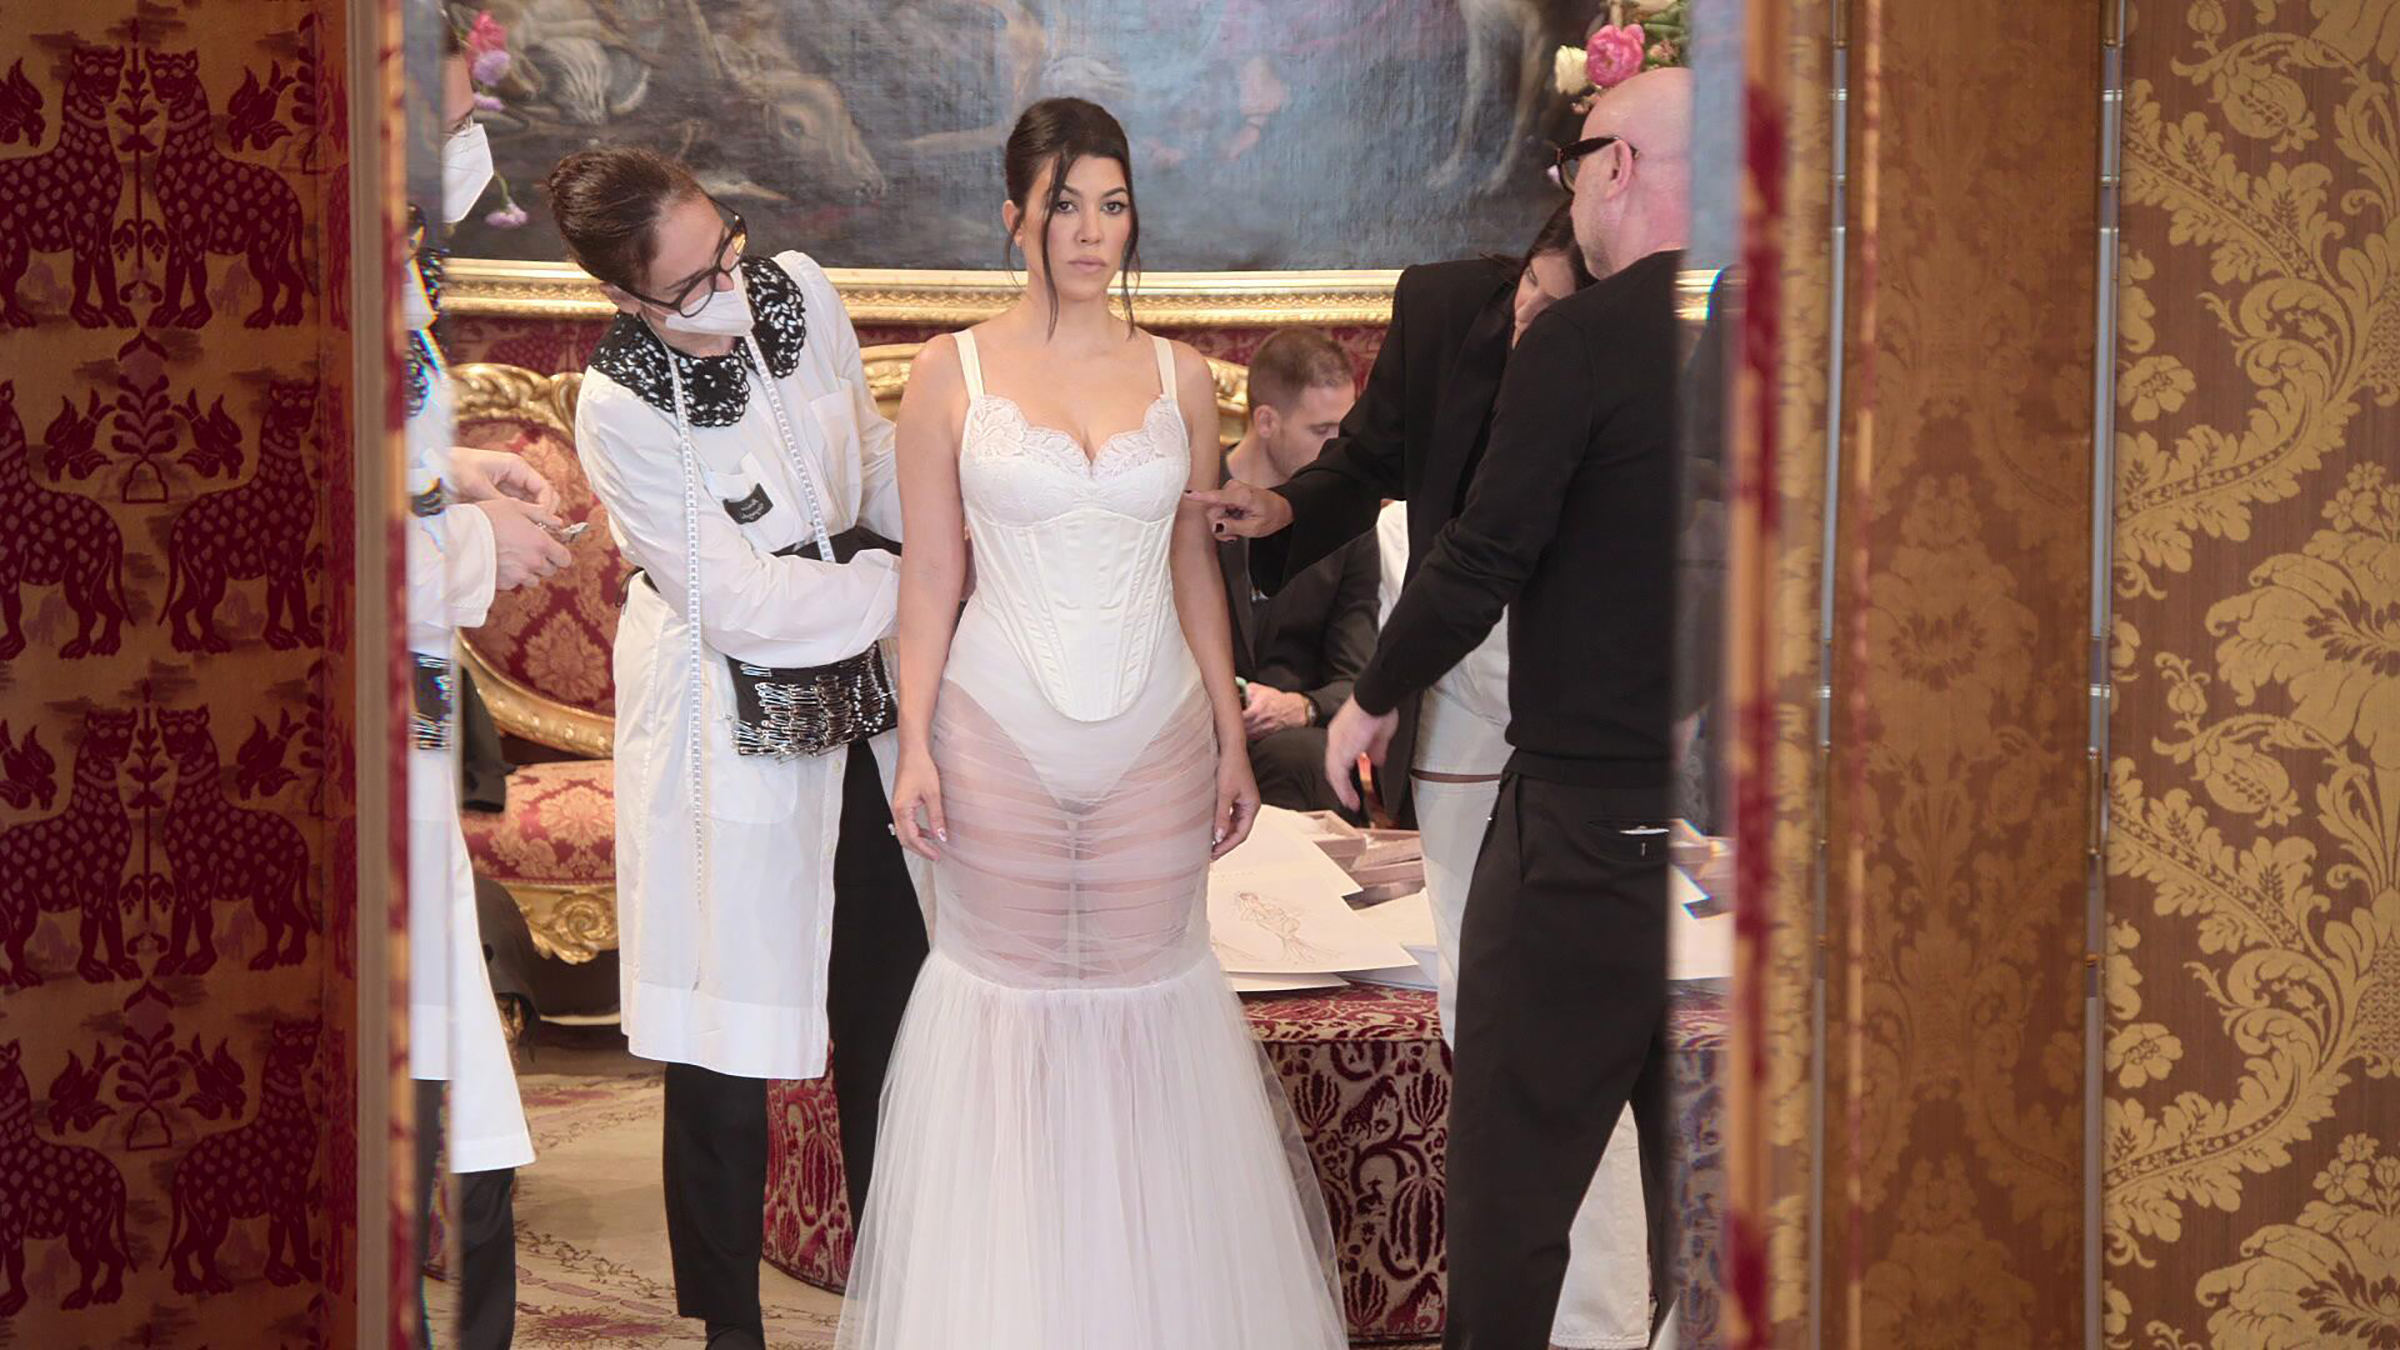 Kourtney Kardashian sees her wedding dress for the first time in Milan